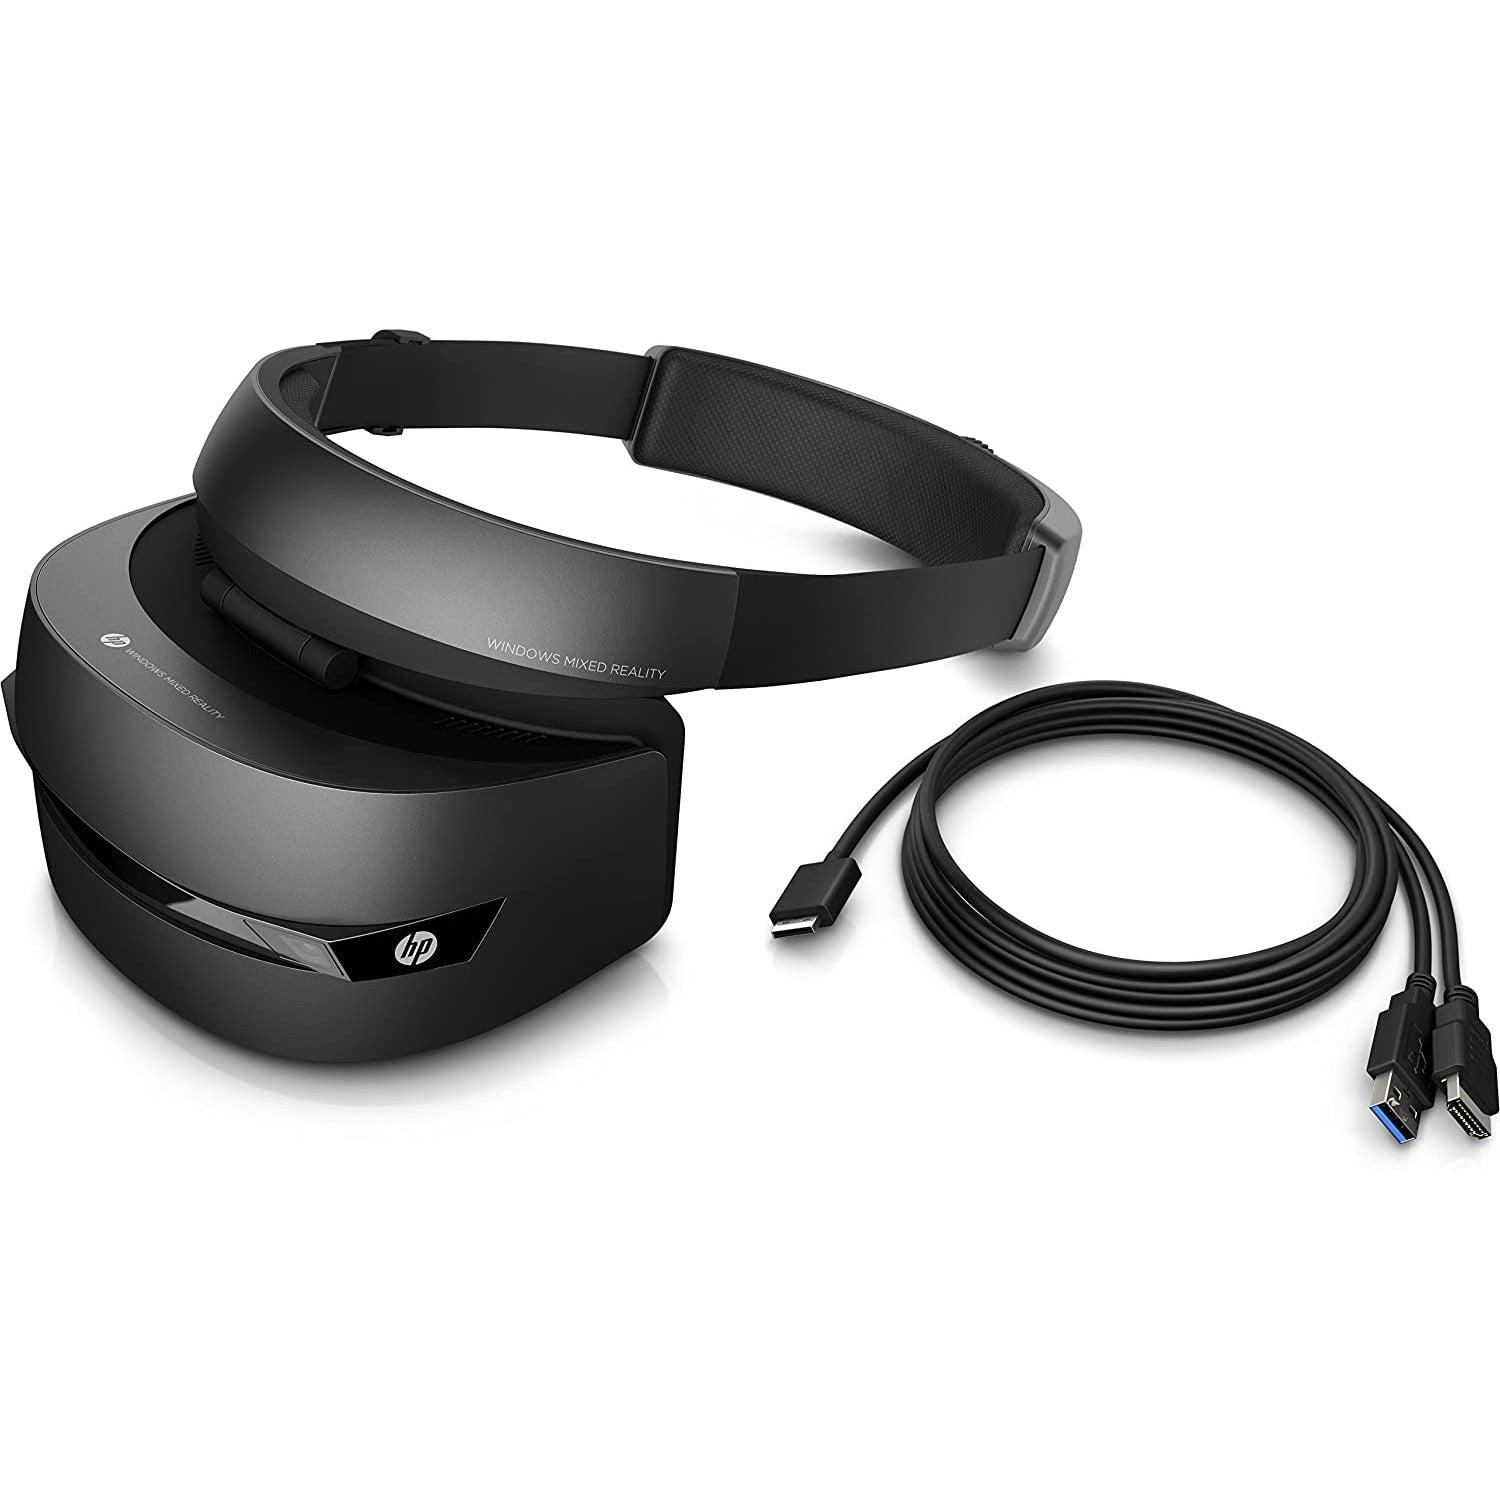 HP Windows Mixed Reality Headset VR1000-100nn – Black (2MJ36EA#ABB)